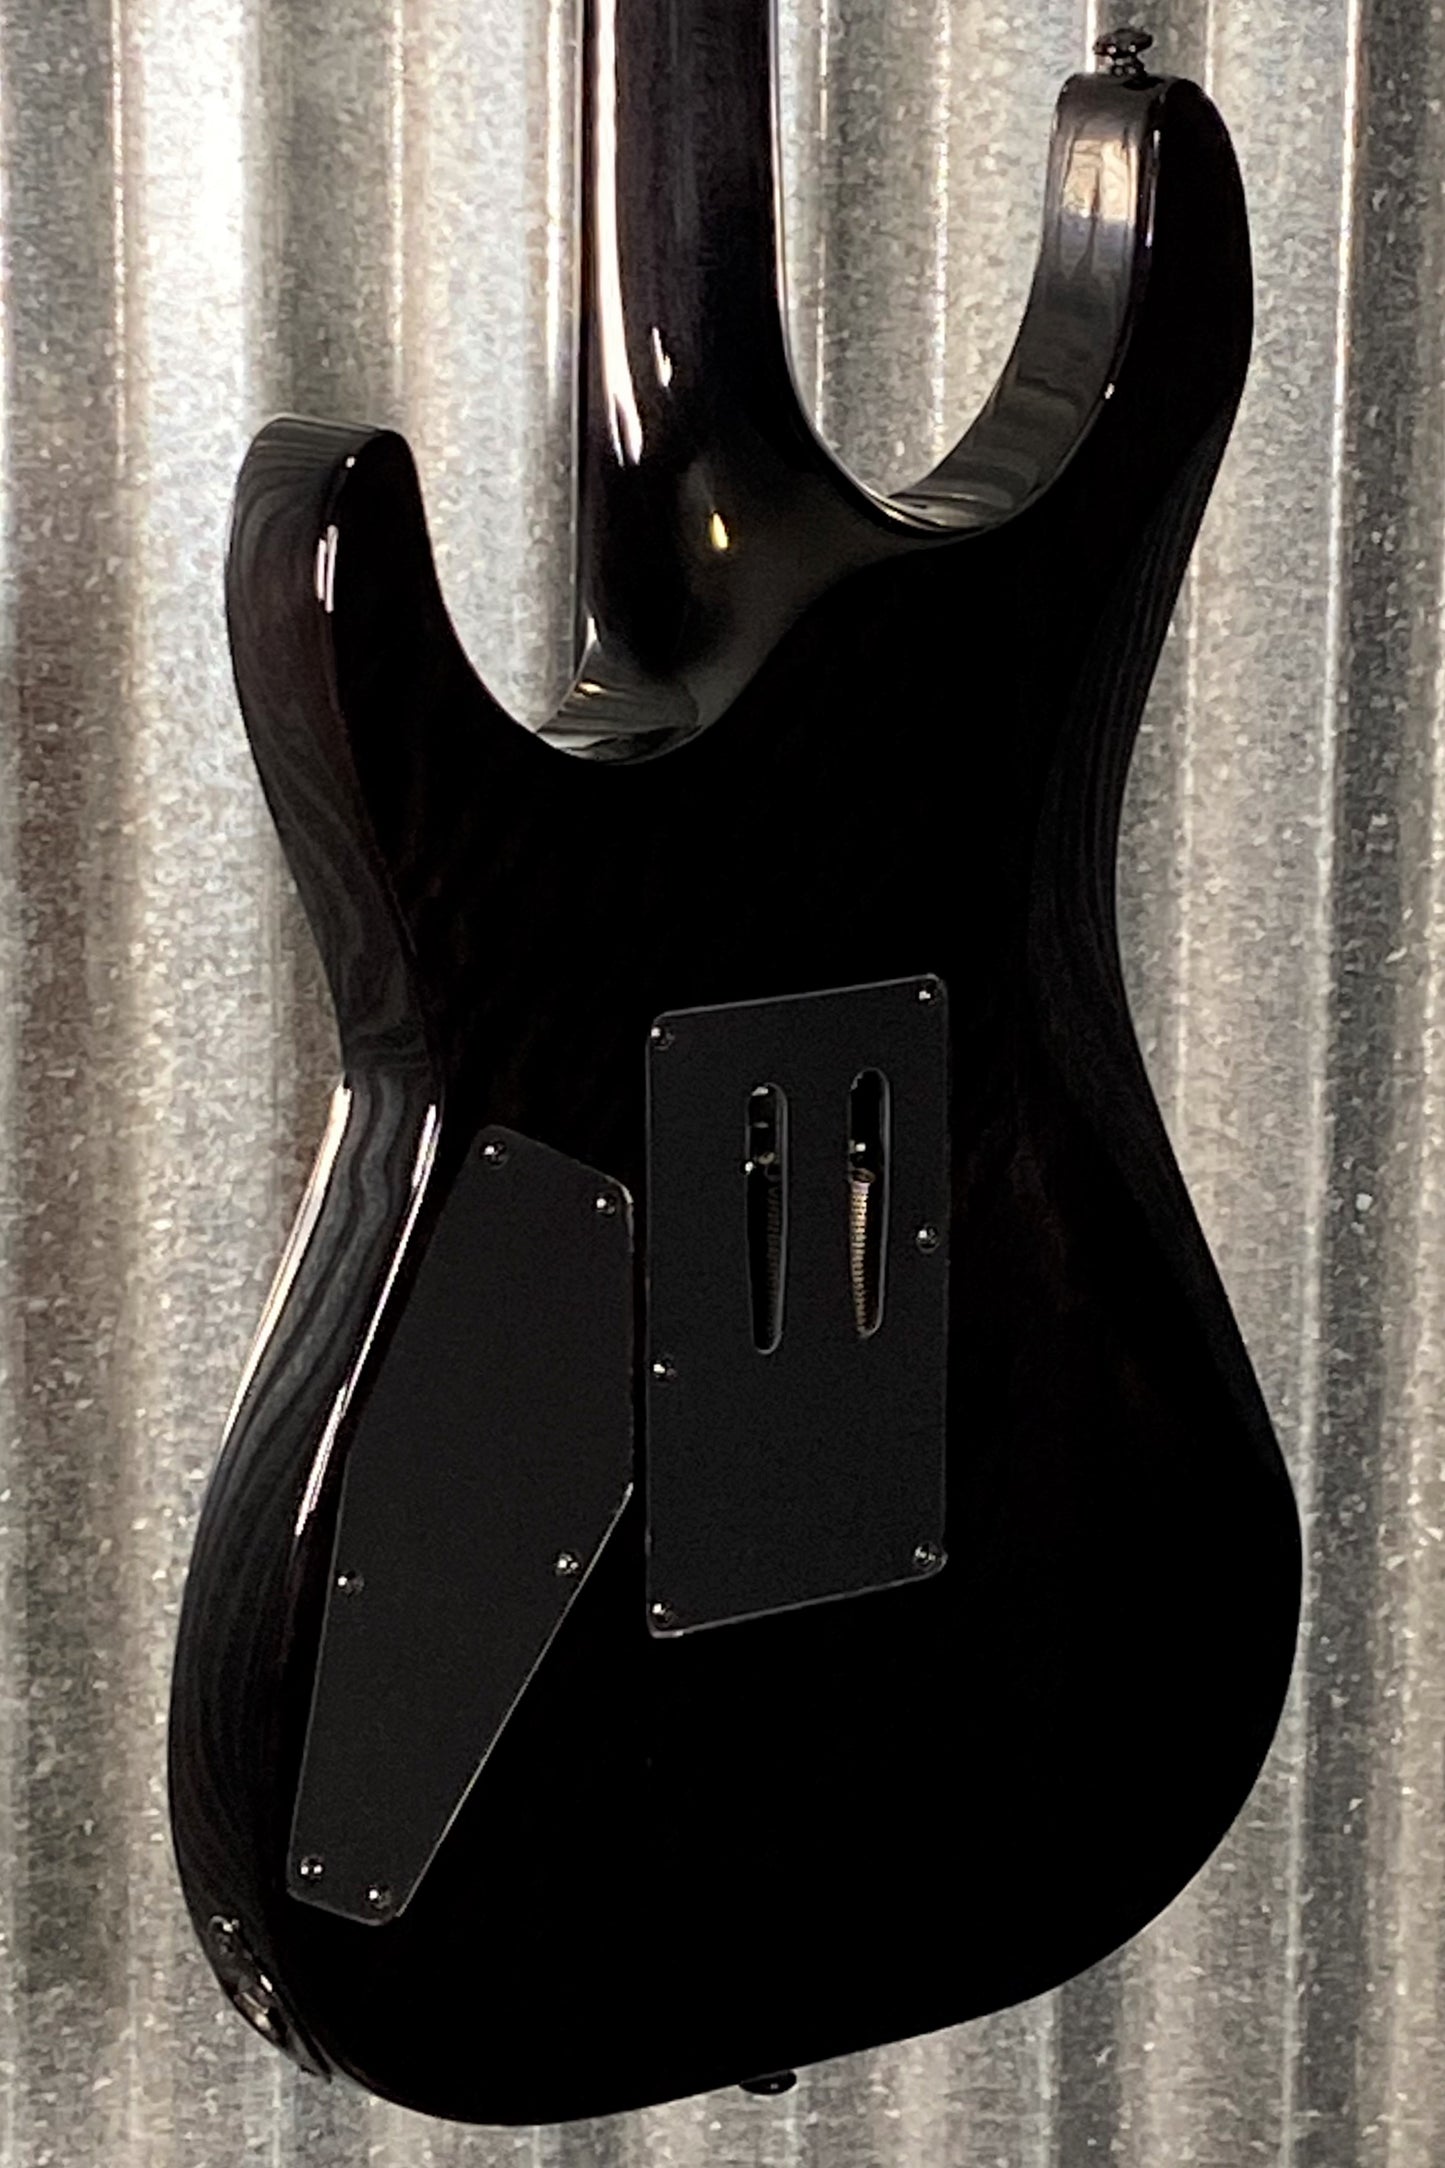 ESP LTD H-1001FR Floyd Rose Black Natural Burst Burl Guitar LH1001FRBPBLKNB #1300 Used